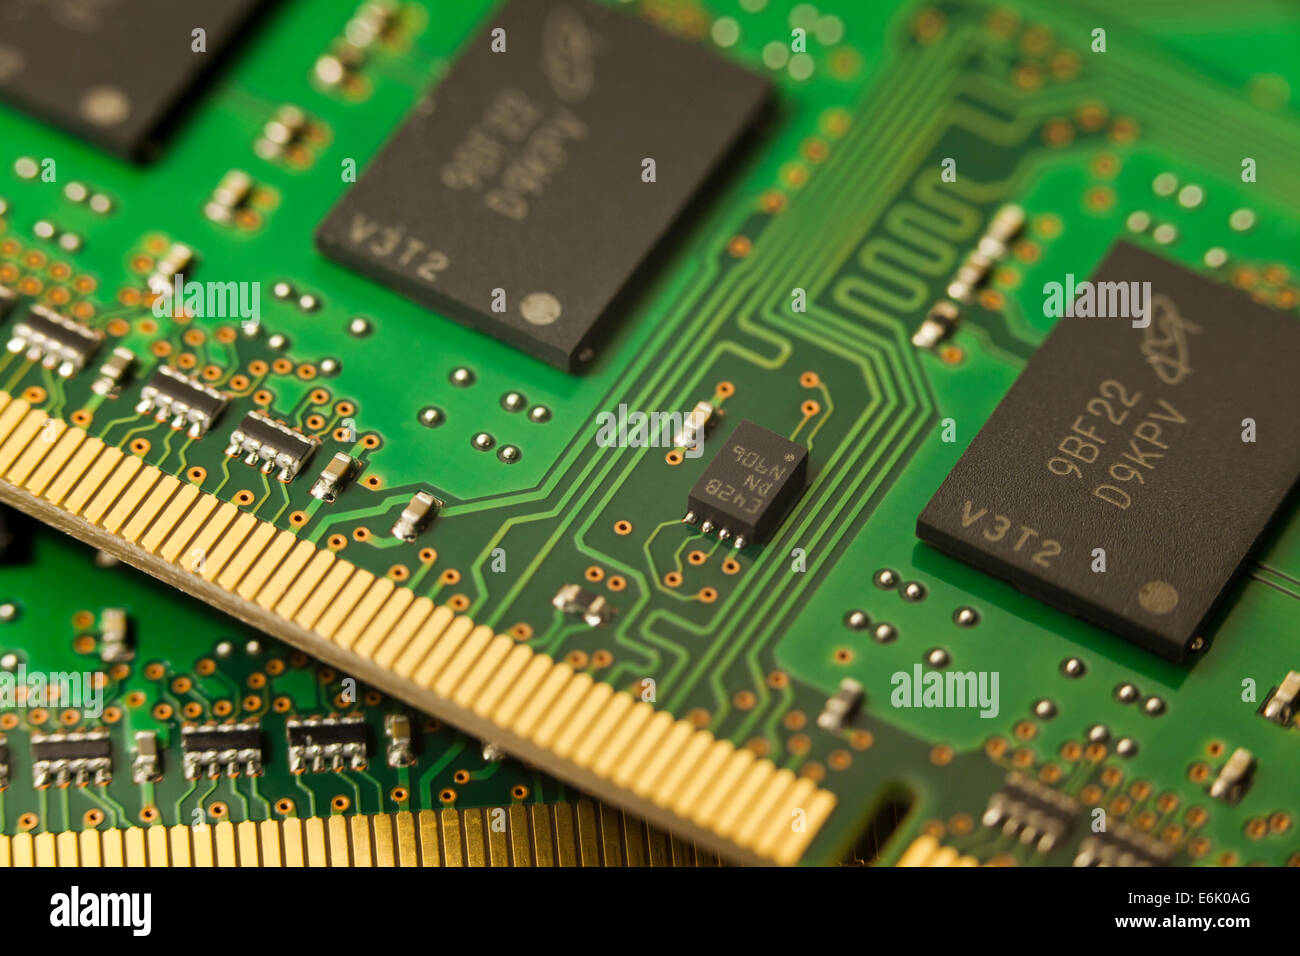 PC3 8500 DDR3 SDRAM laptop memory cards Stock Photo